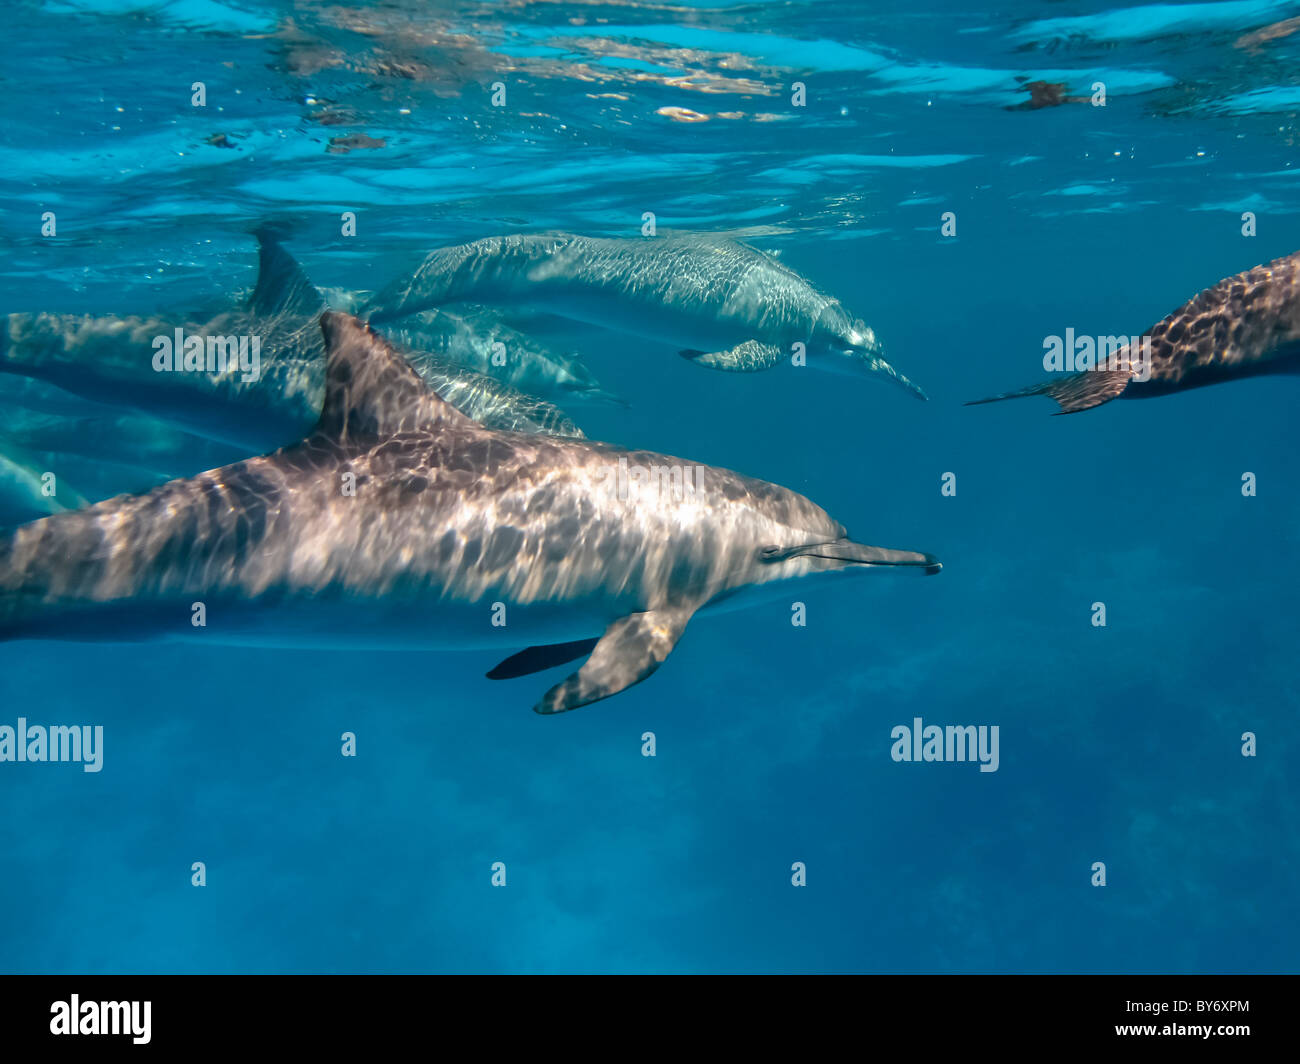 Spinner Dolphins, Stenella longirostris, Spinnerdelfine, milling at Shaab Marsa Alam, Egypt, underwater group Stock Photo